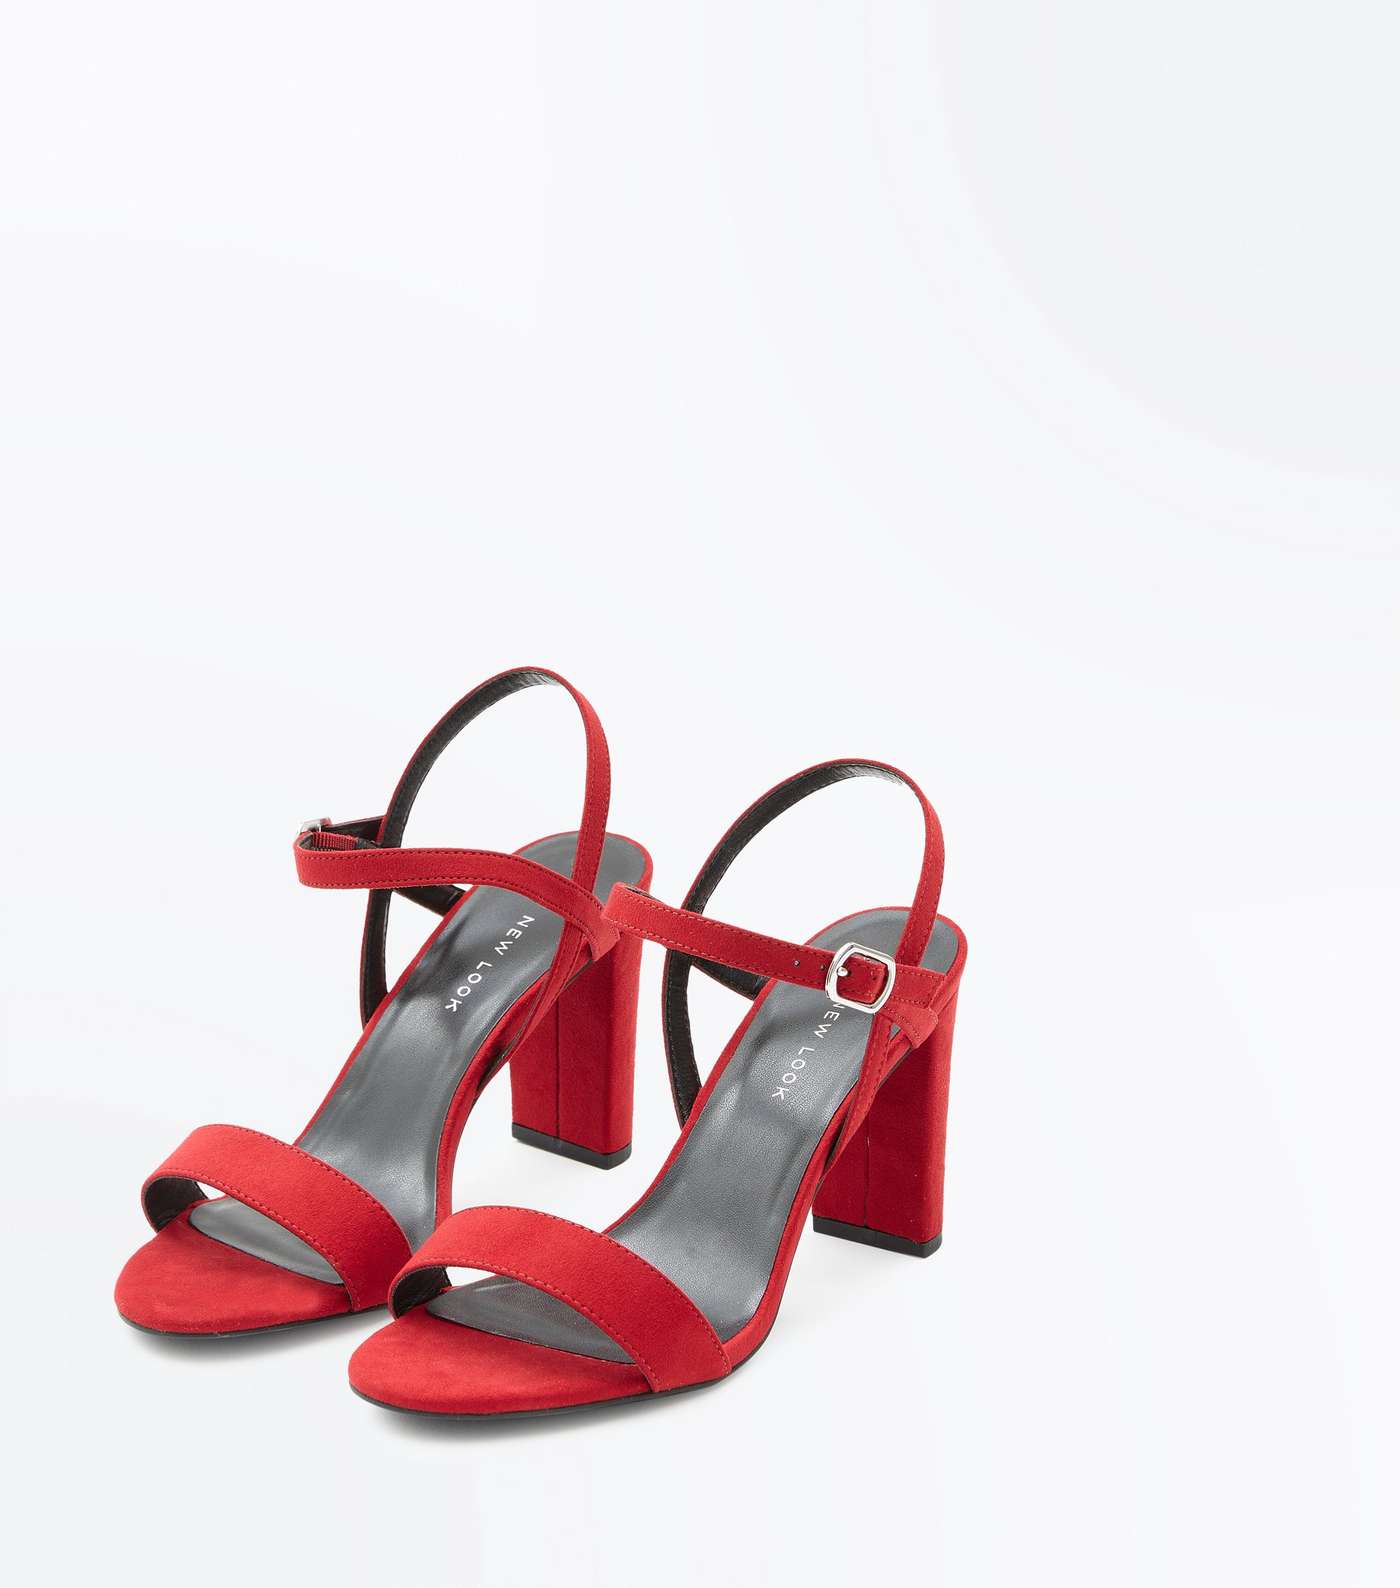 Wide Fit Red Suedette Cross Strap Side Heels Image 5